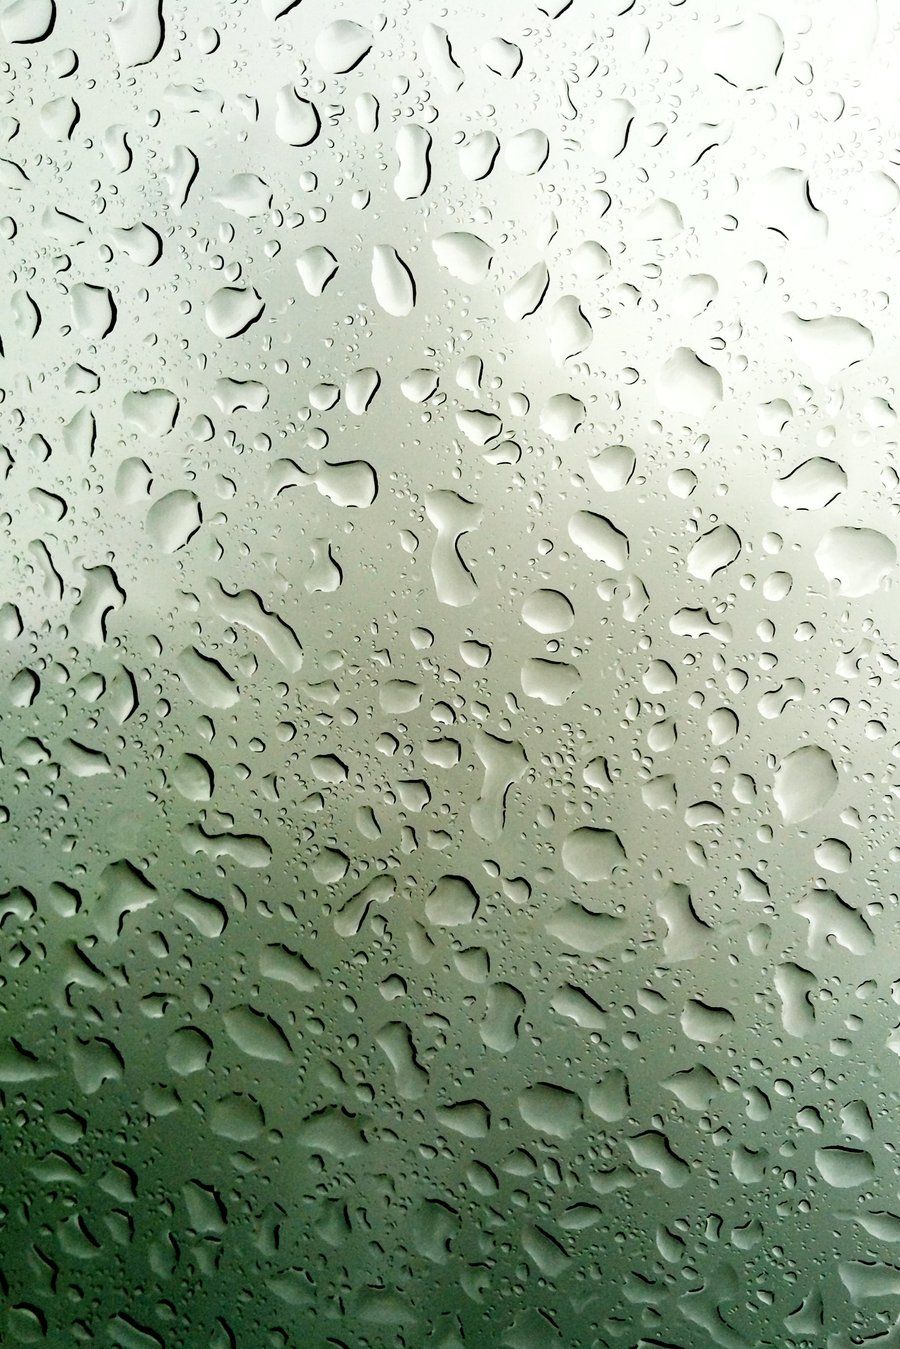 iPhone Wallpaper - Raindrops by clokverkorange on DeviantArt